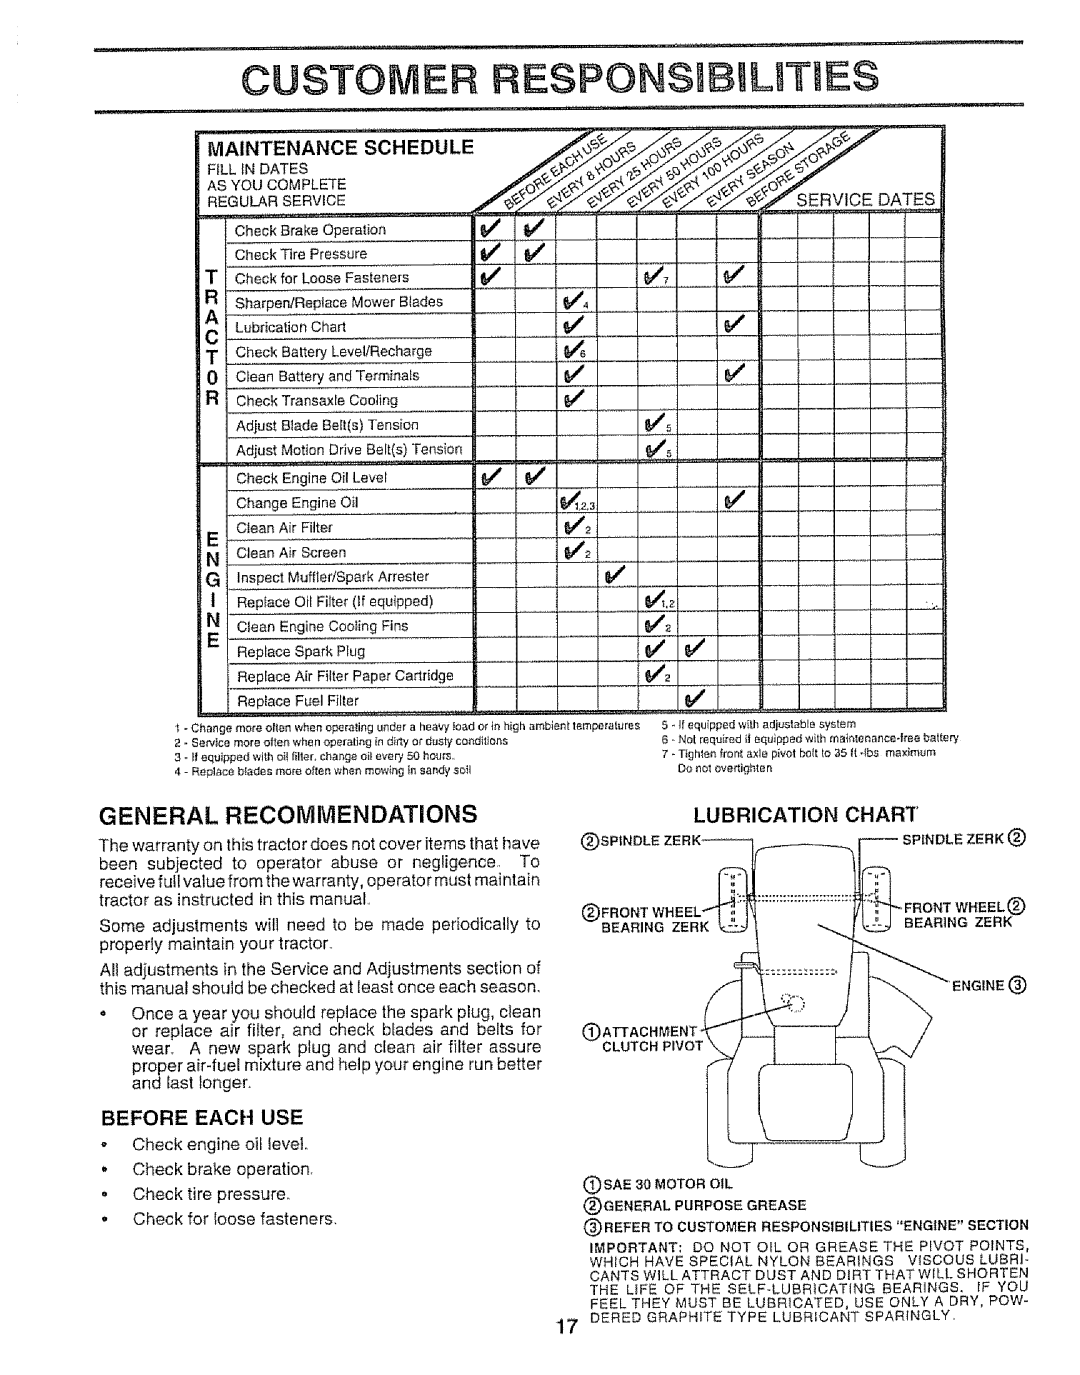 Craftsman 917.259592 owner manual Customer, RESPONSmlB LI TiES, General Recommendations, Lubrication, Chart, tM#6 